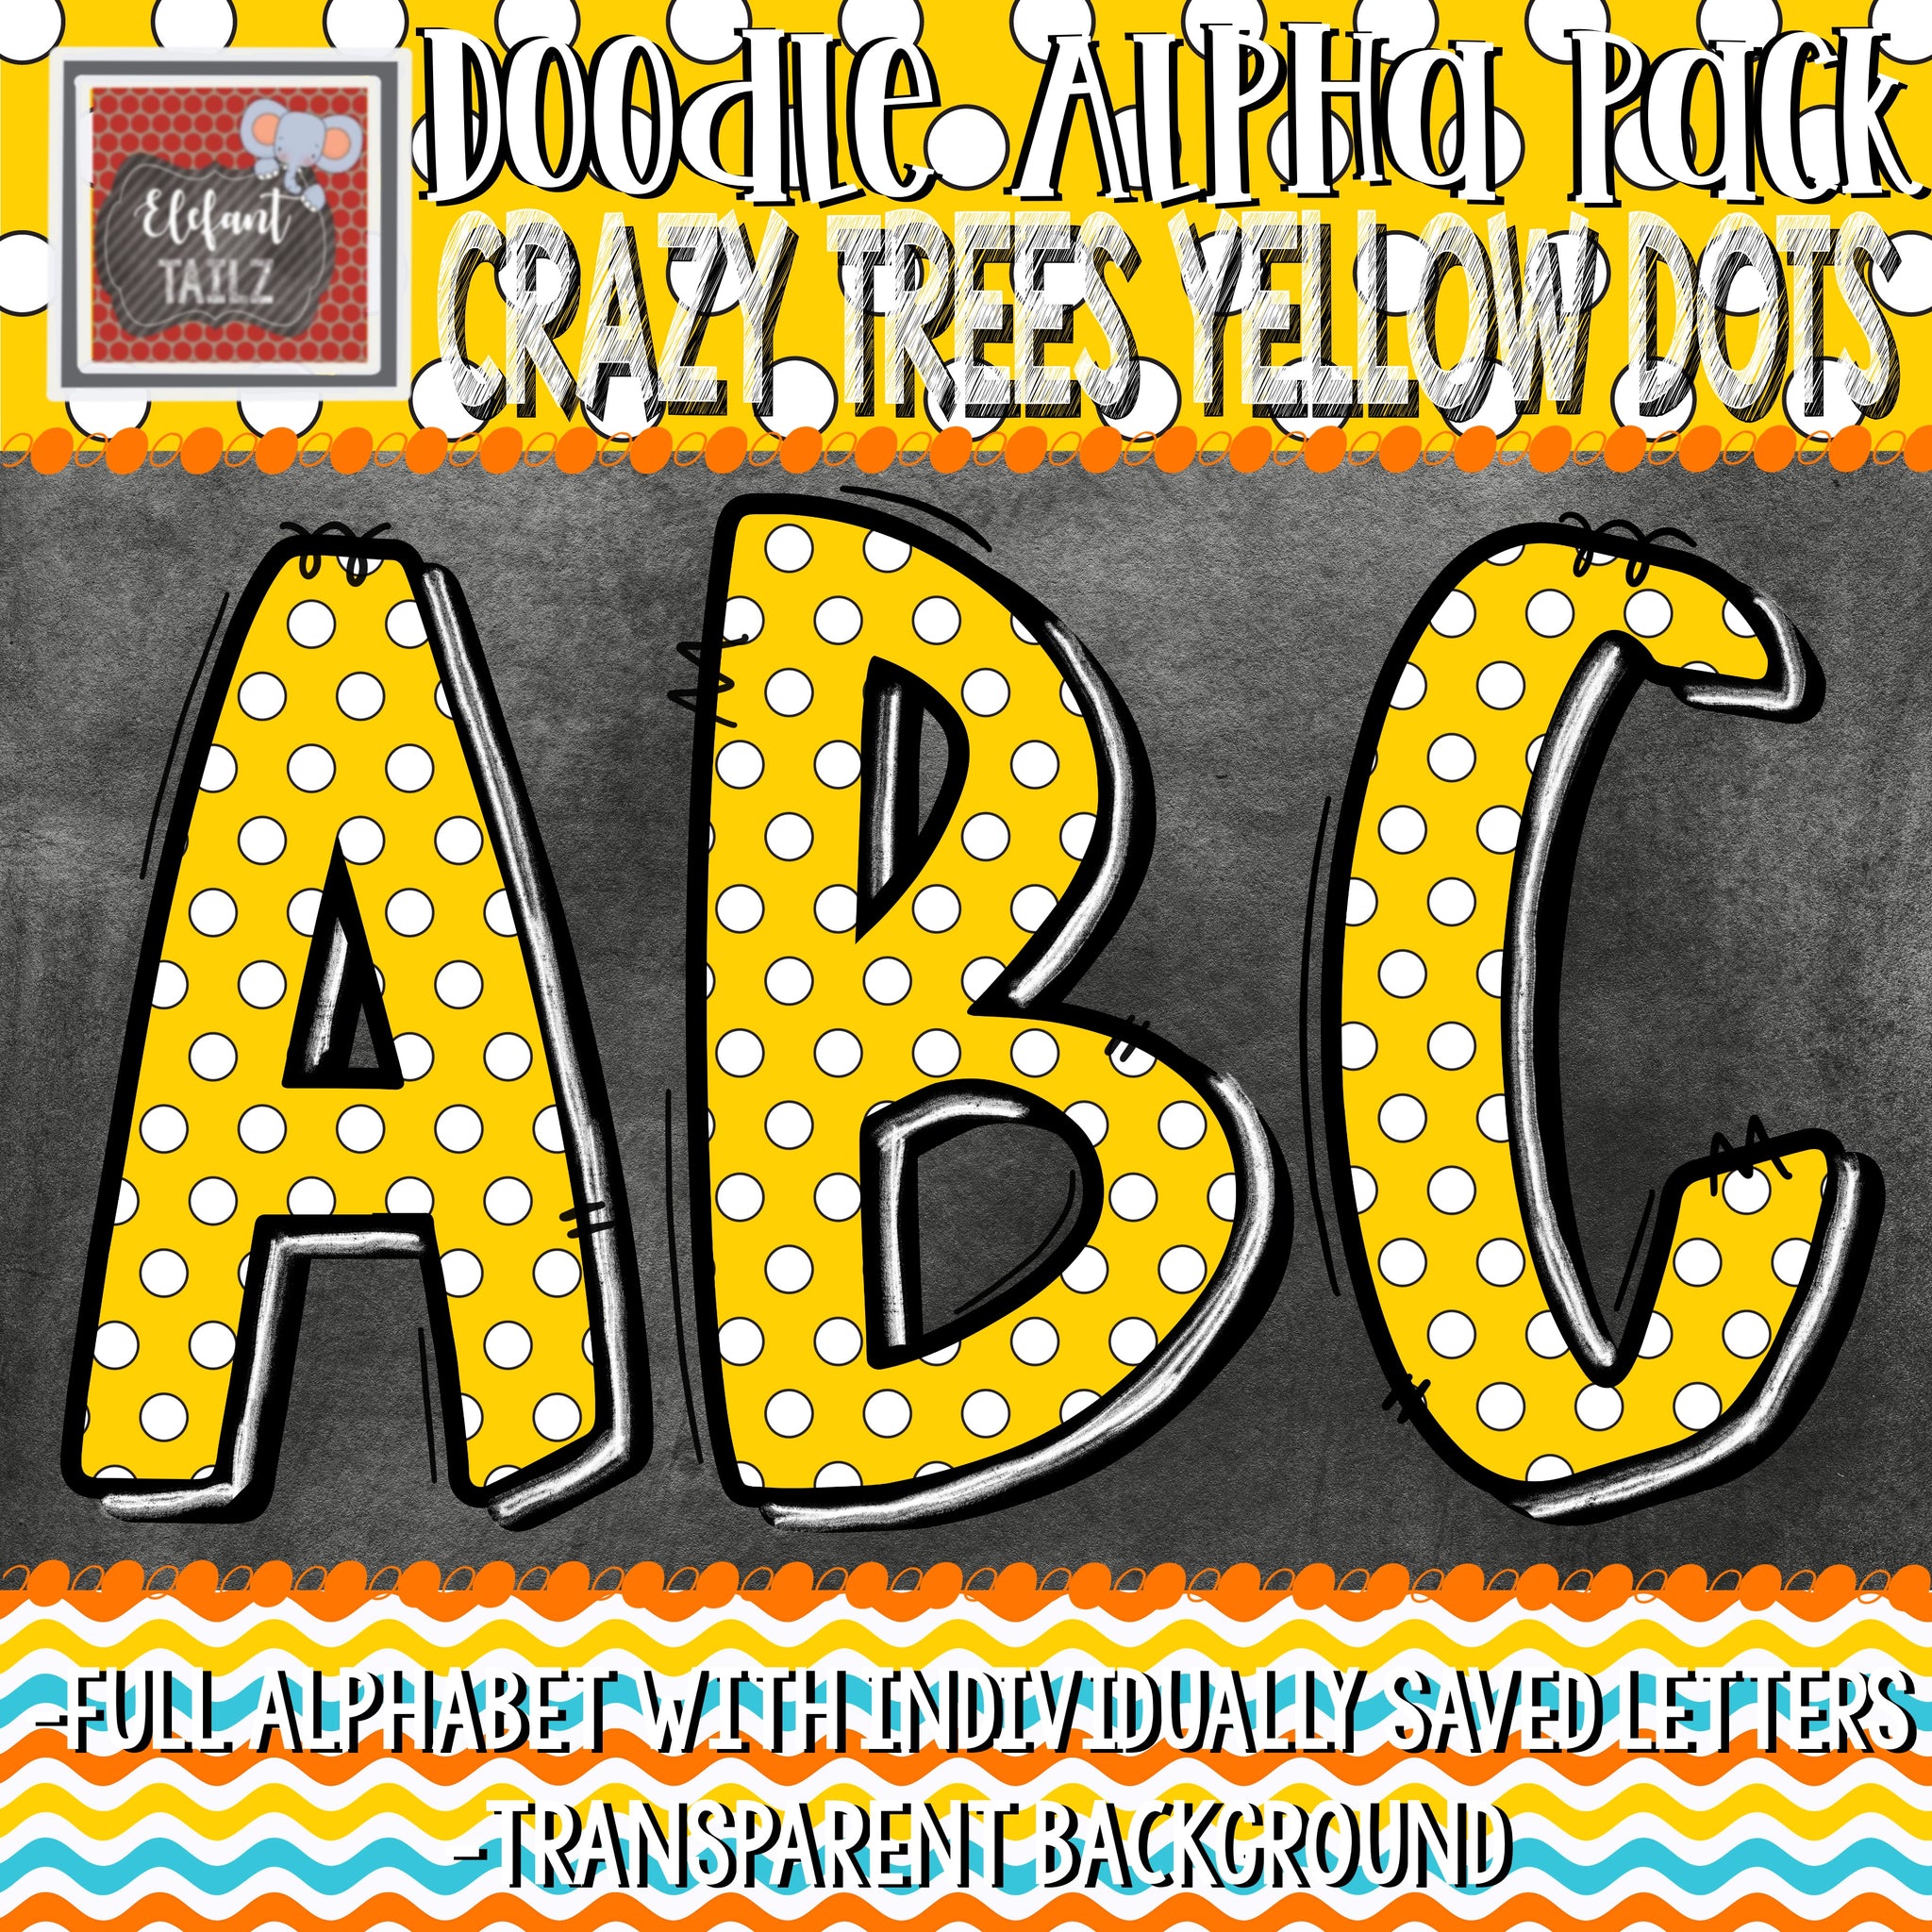 Doodle Alpha - Crazy Trees Yellow Dots